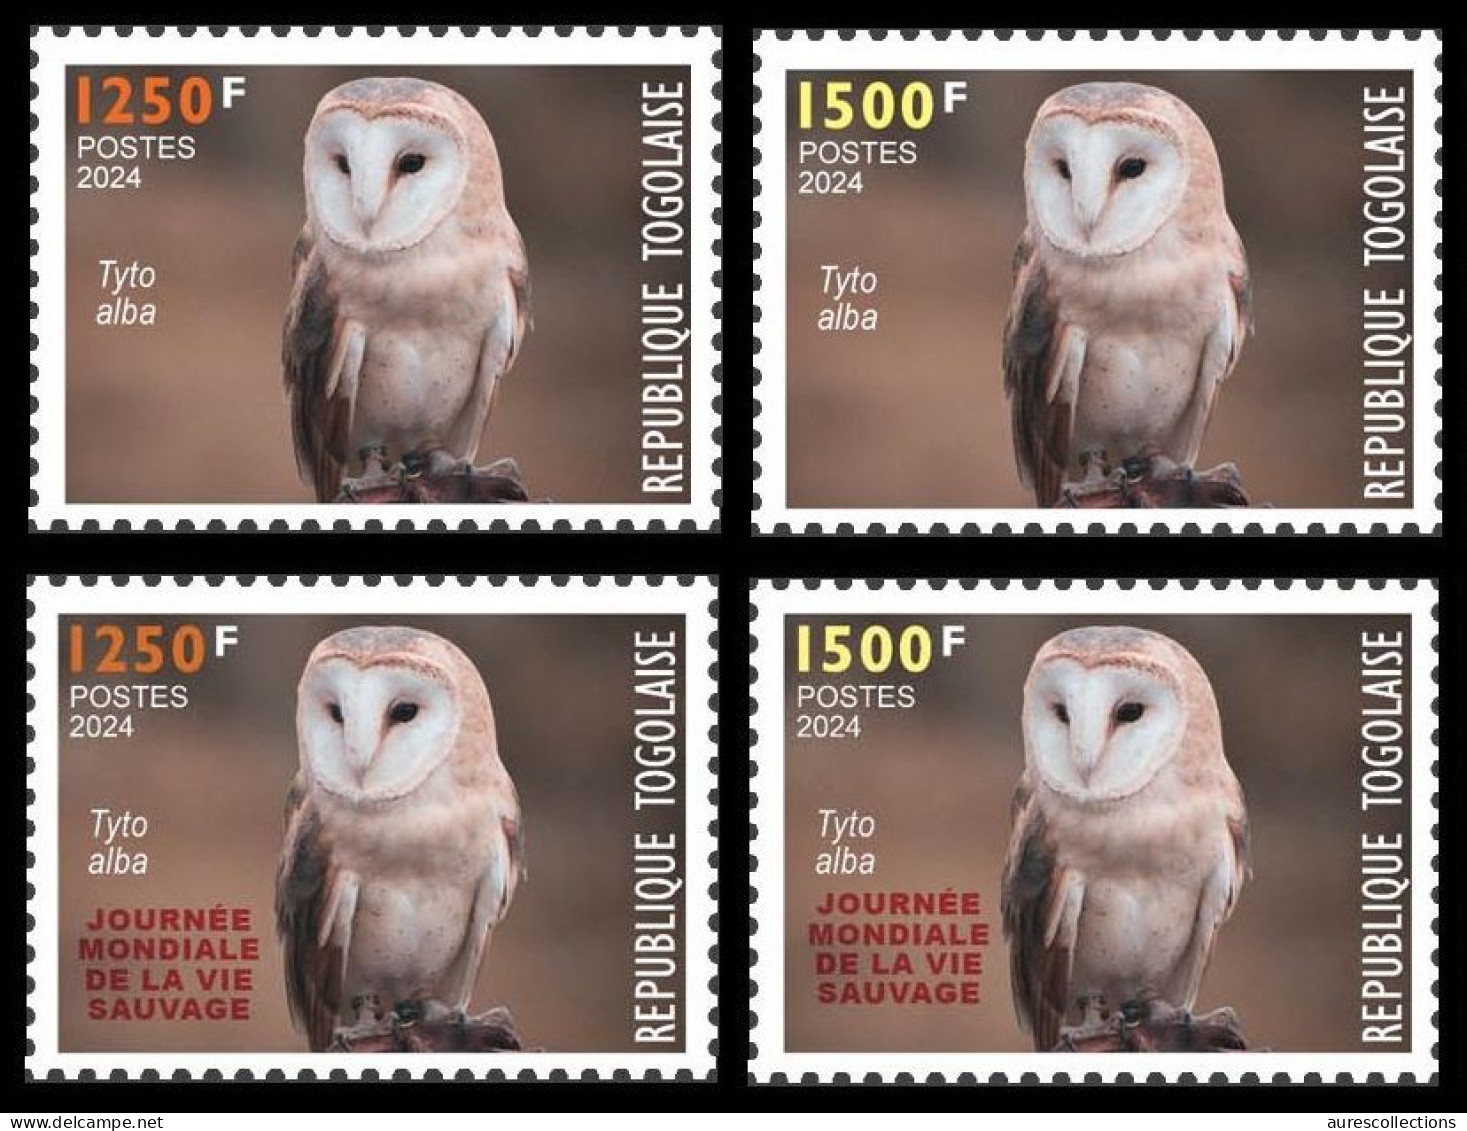 TOGO 2024 SET 4V - REGULAR & OVERPRINT - OWLS OWL HIBOU HIBOUX BIRDS OISEAUX - BIODIVERSITY BIODIVERSITE - MNH - Búhos, Lechuza